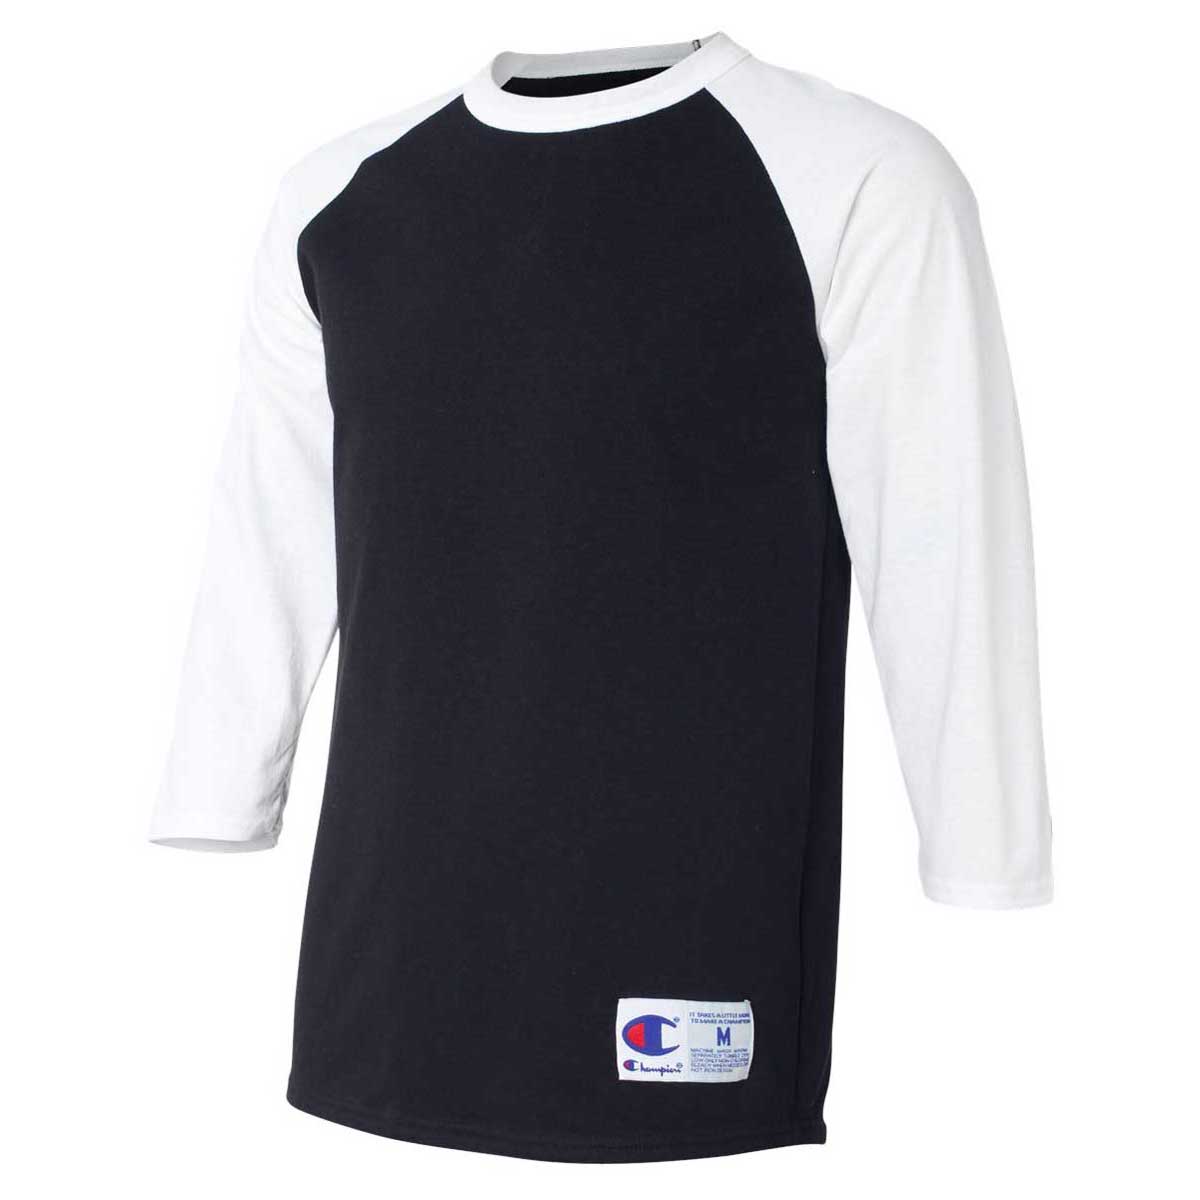 Champion Raglan Baseball T-Shirt Black/White / S